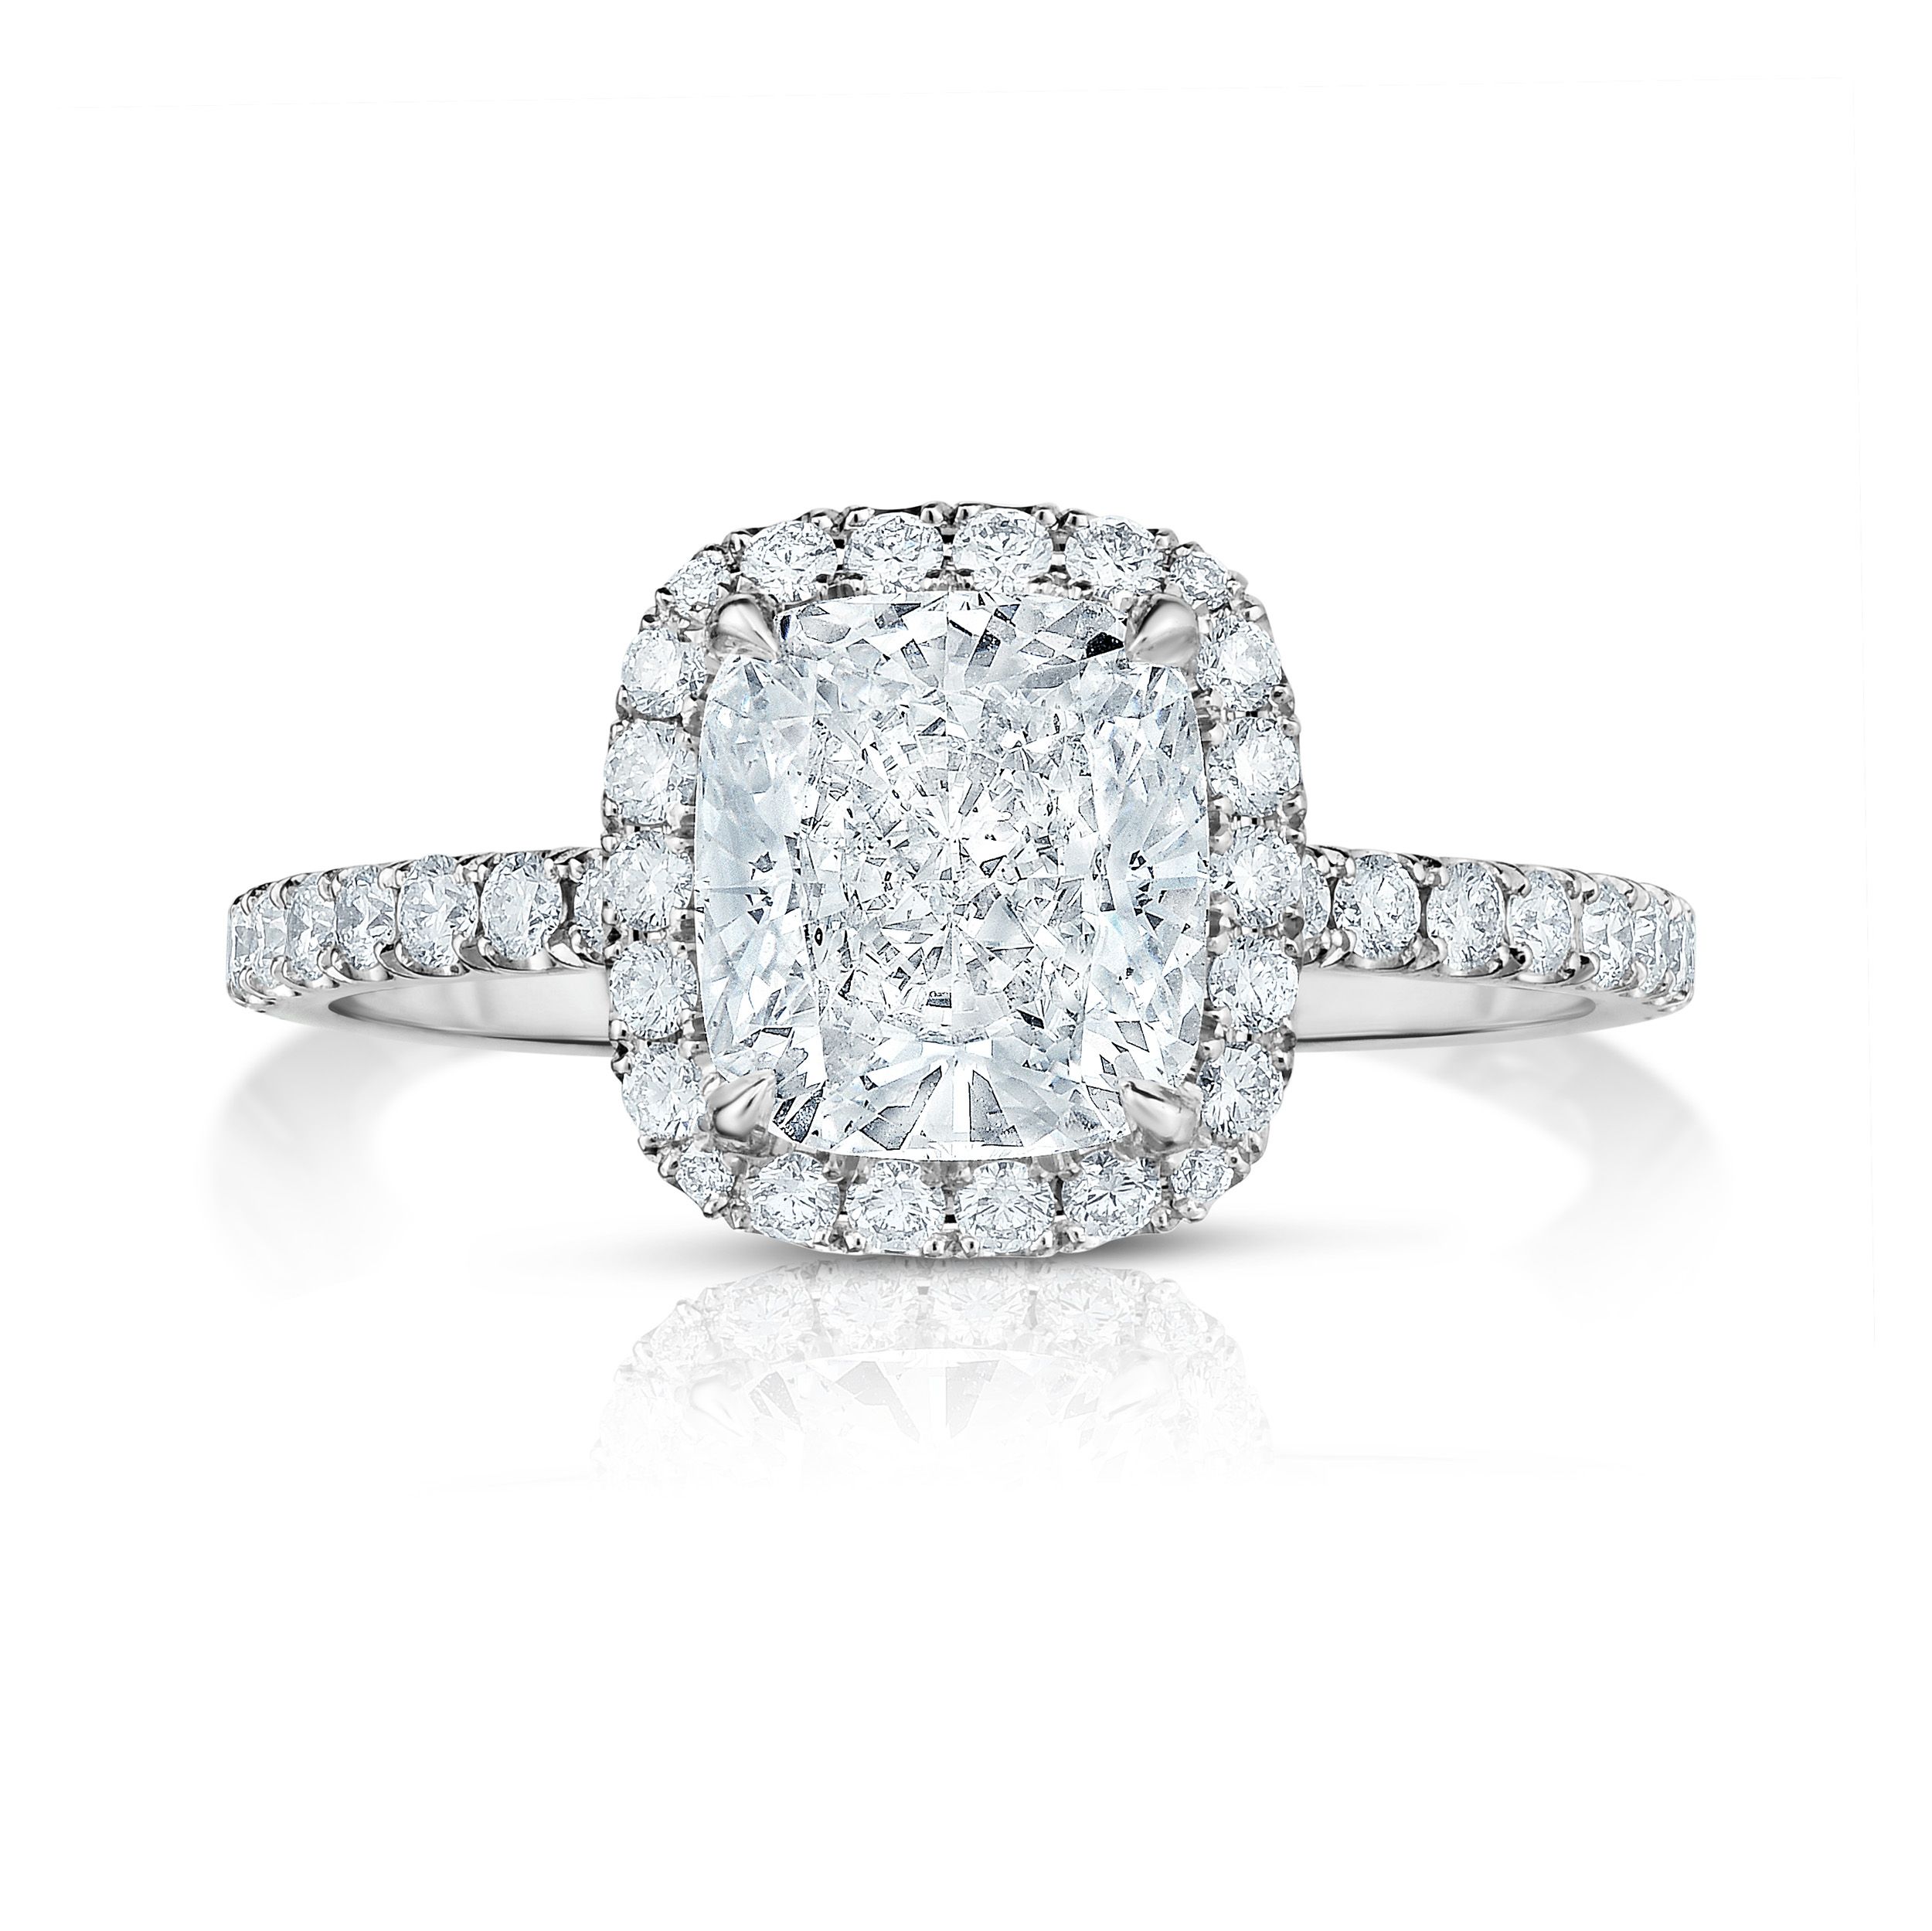 Elongated Cushion Cut Diamonds & Engagement Rings